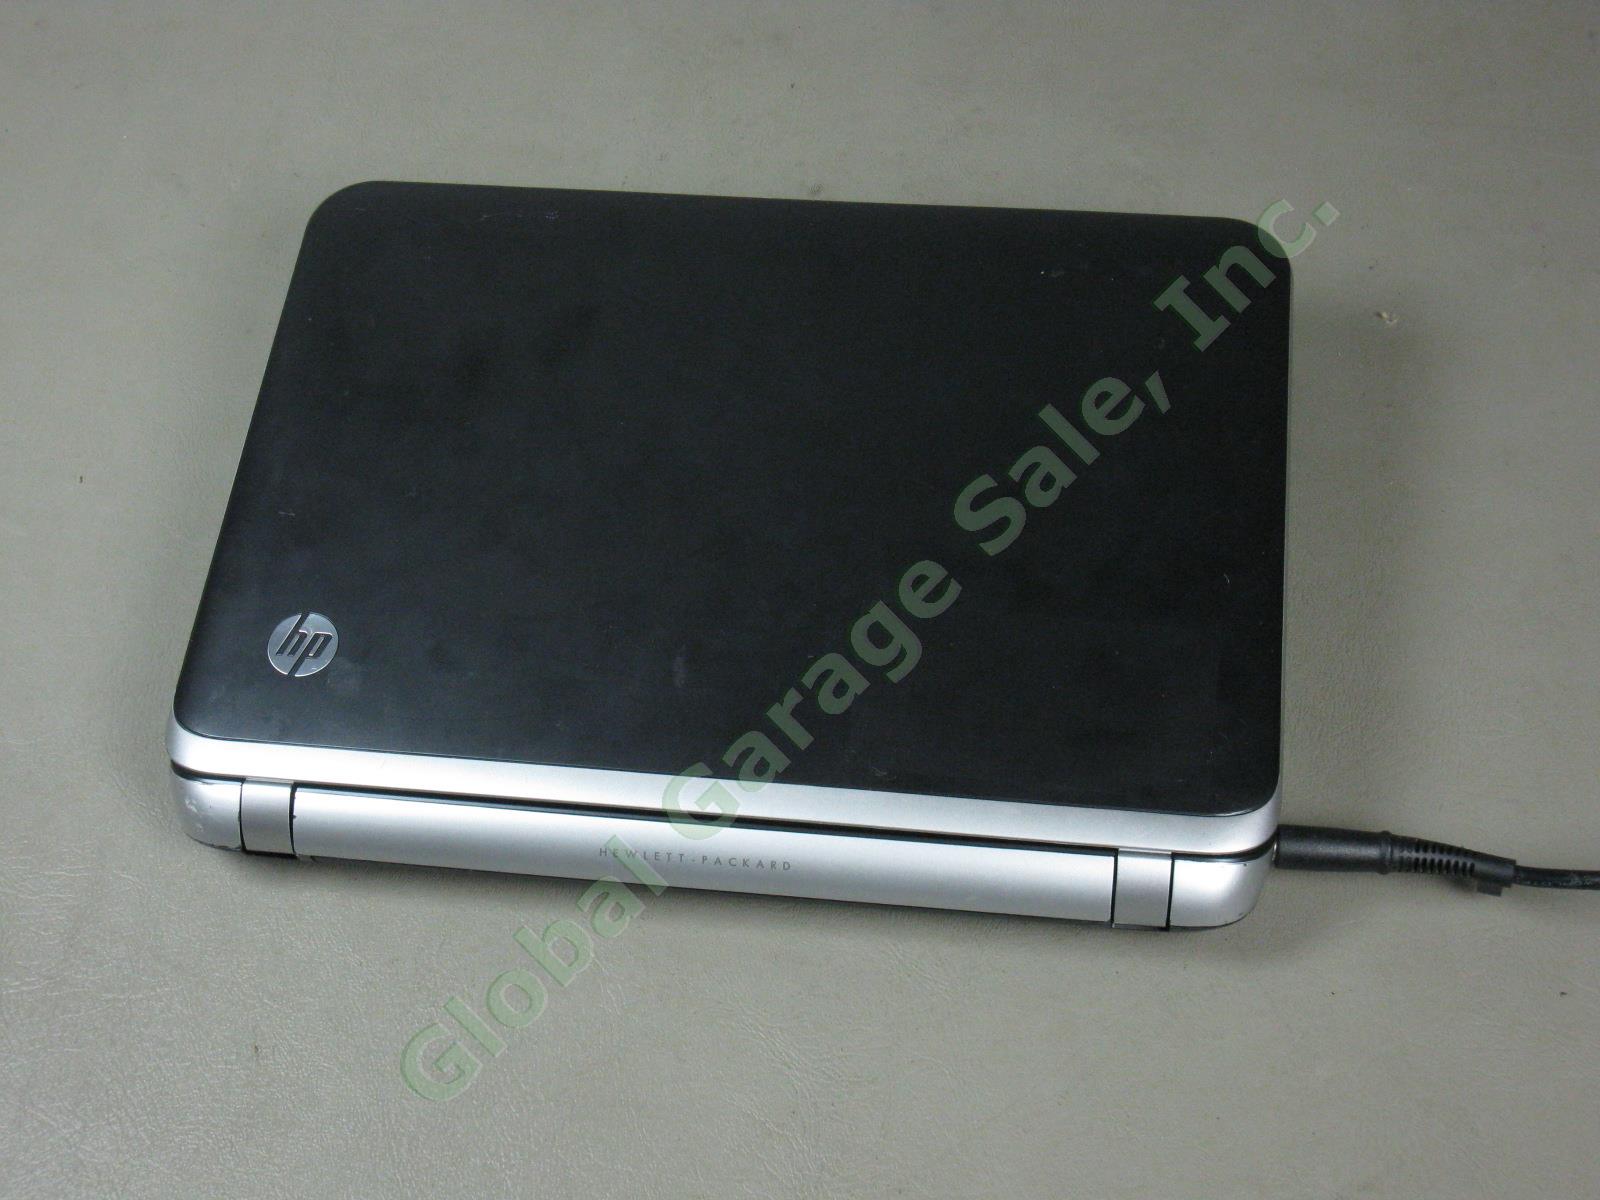 HP 3115m Notebook 11.6" Laptop Computer AMD 1.65GHz 4GB RAM 320GB Windows 7 Ult 3